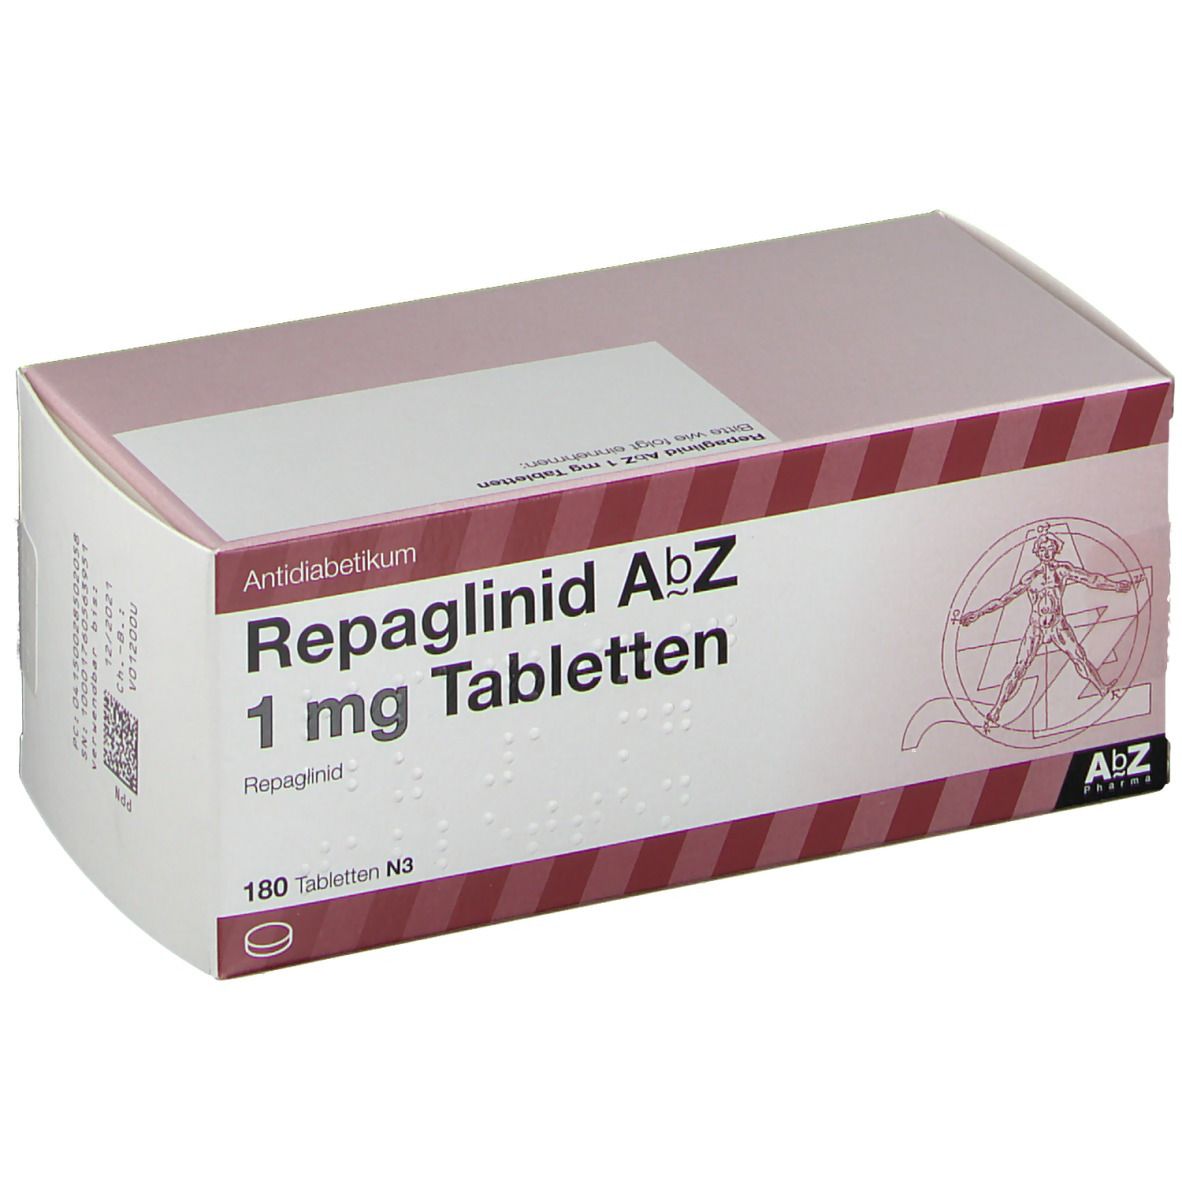 Repaglinid AbZ 1 mg